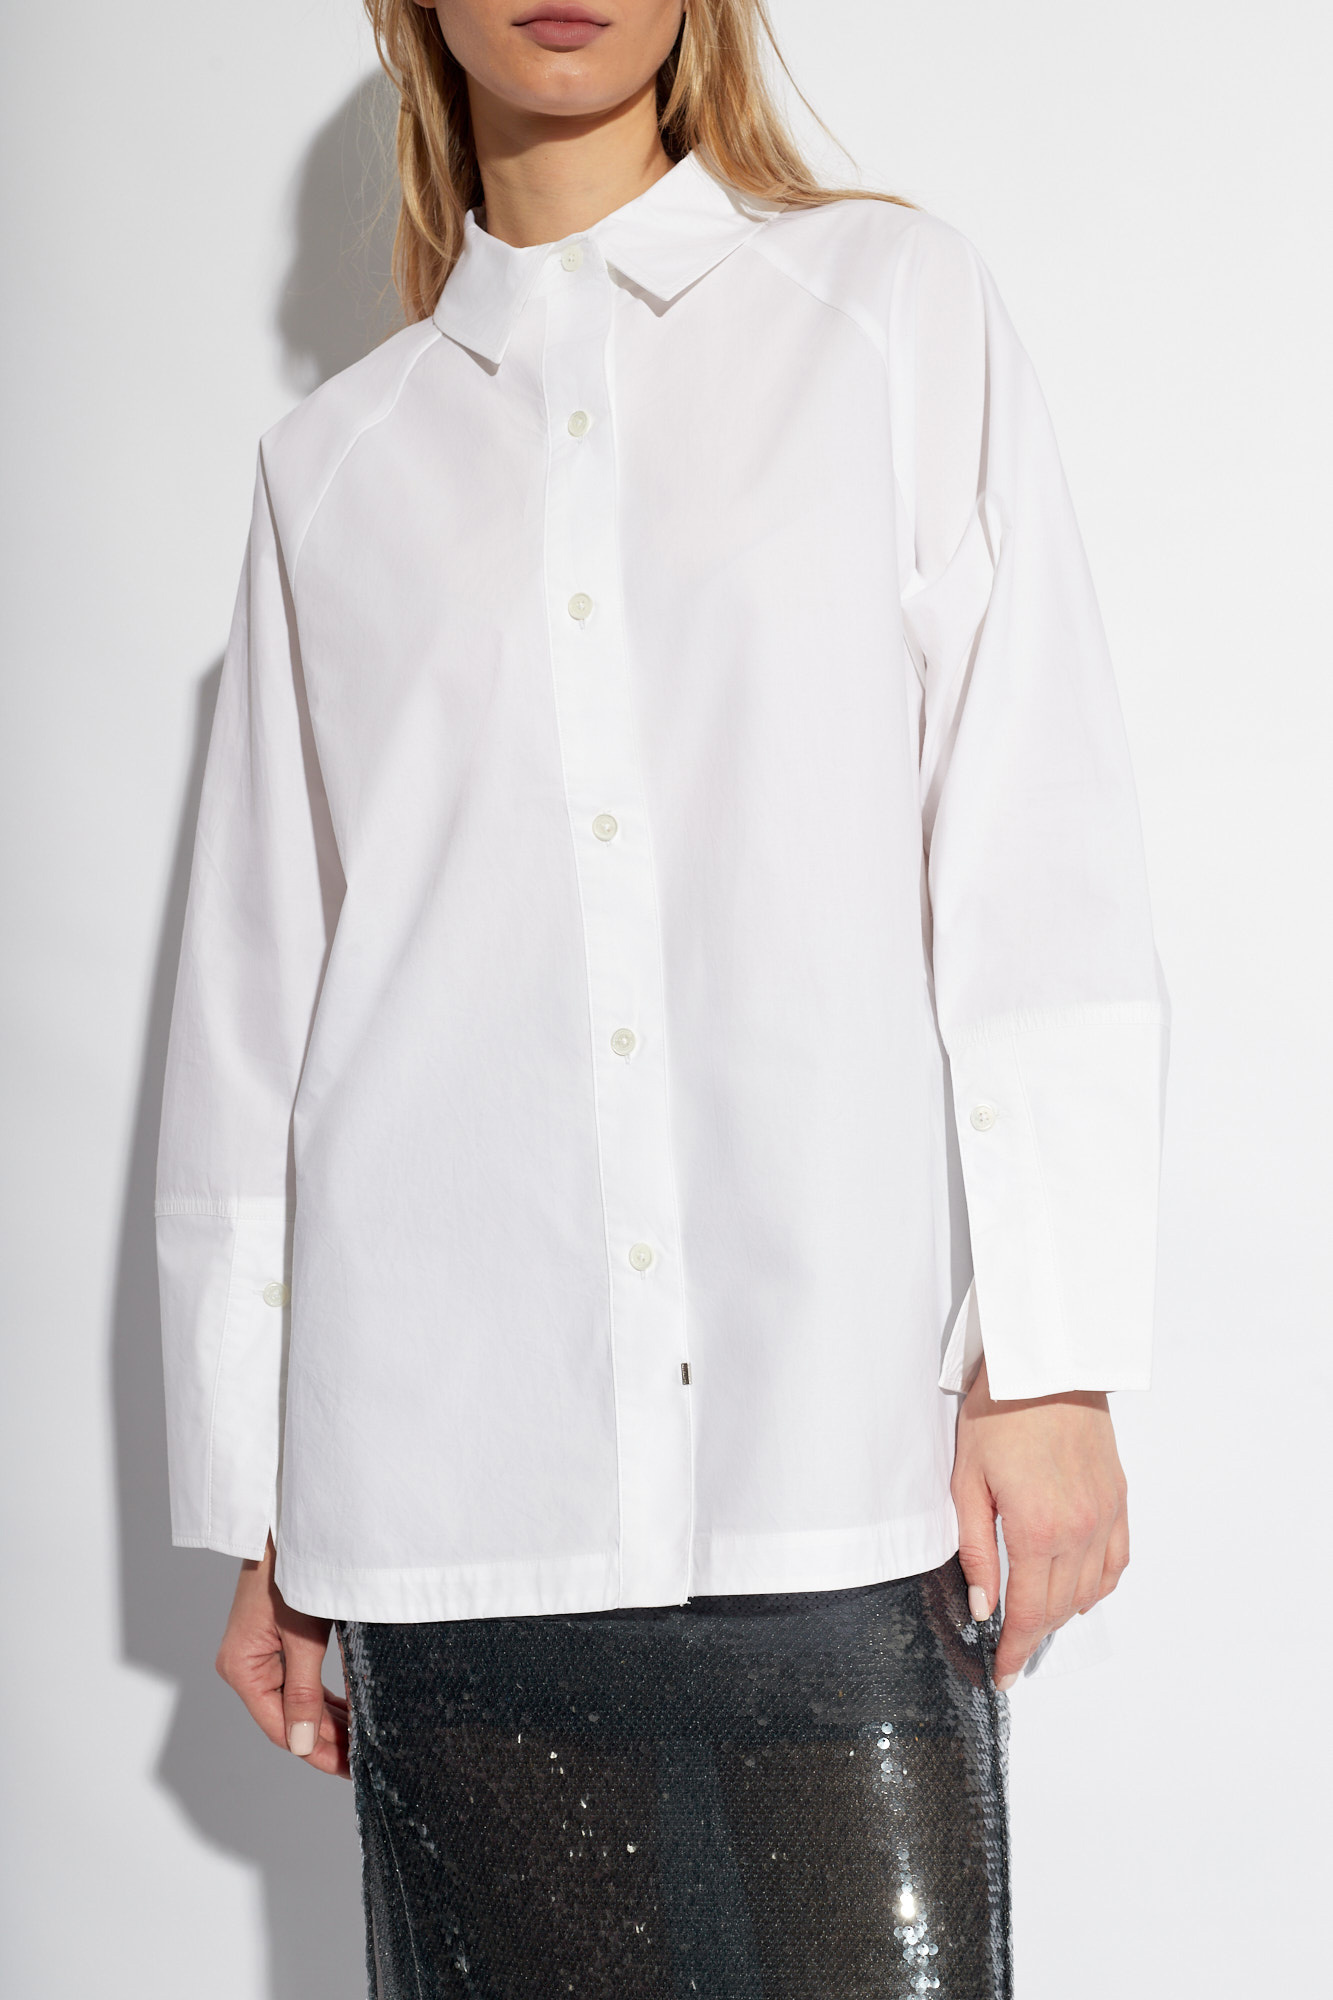 Short Sleeve Pointelle Shirt - Cream, Fashion Nova, Mens Shirts